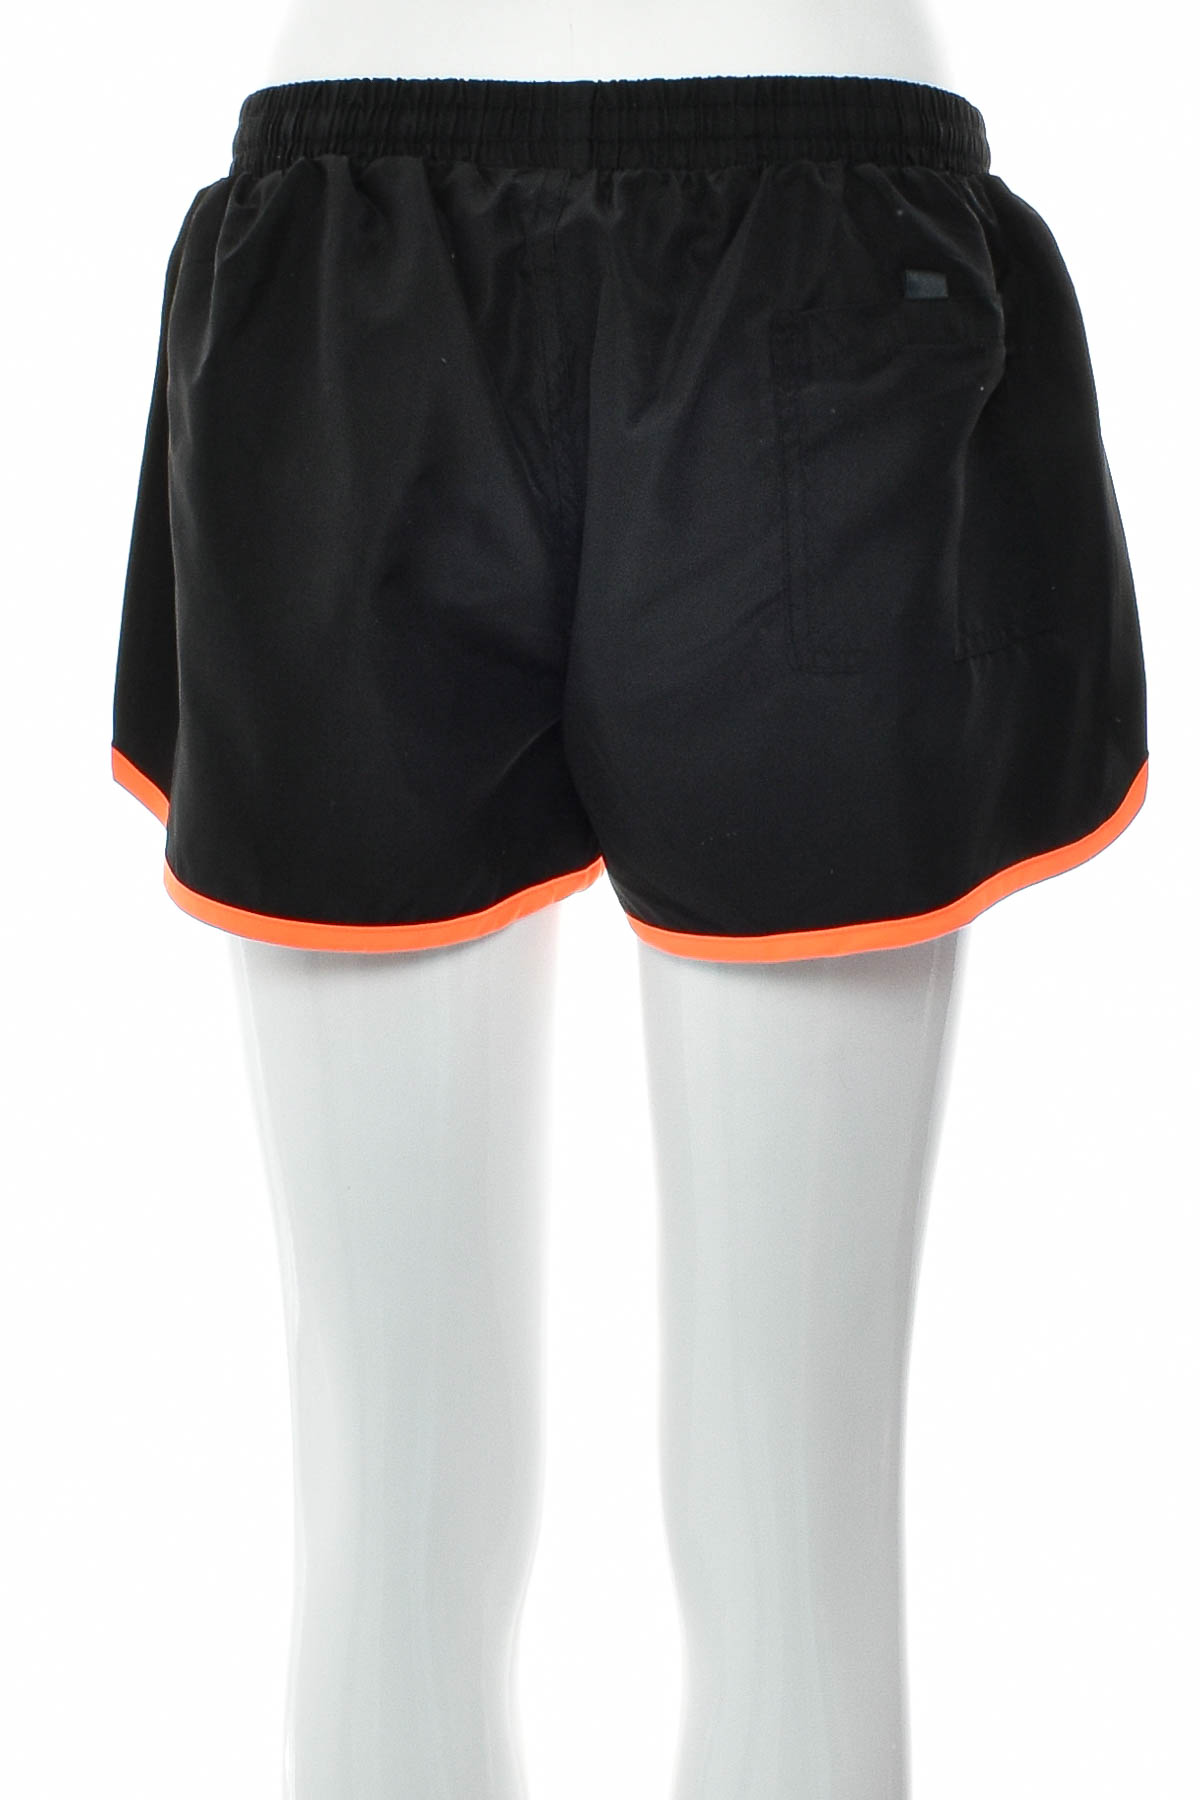 Women's shorts - Yaliishi - 1